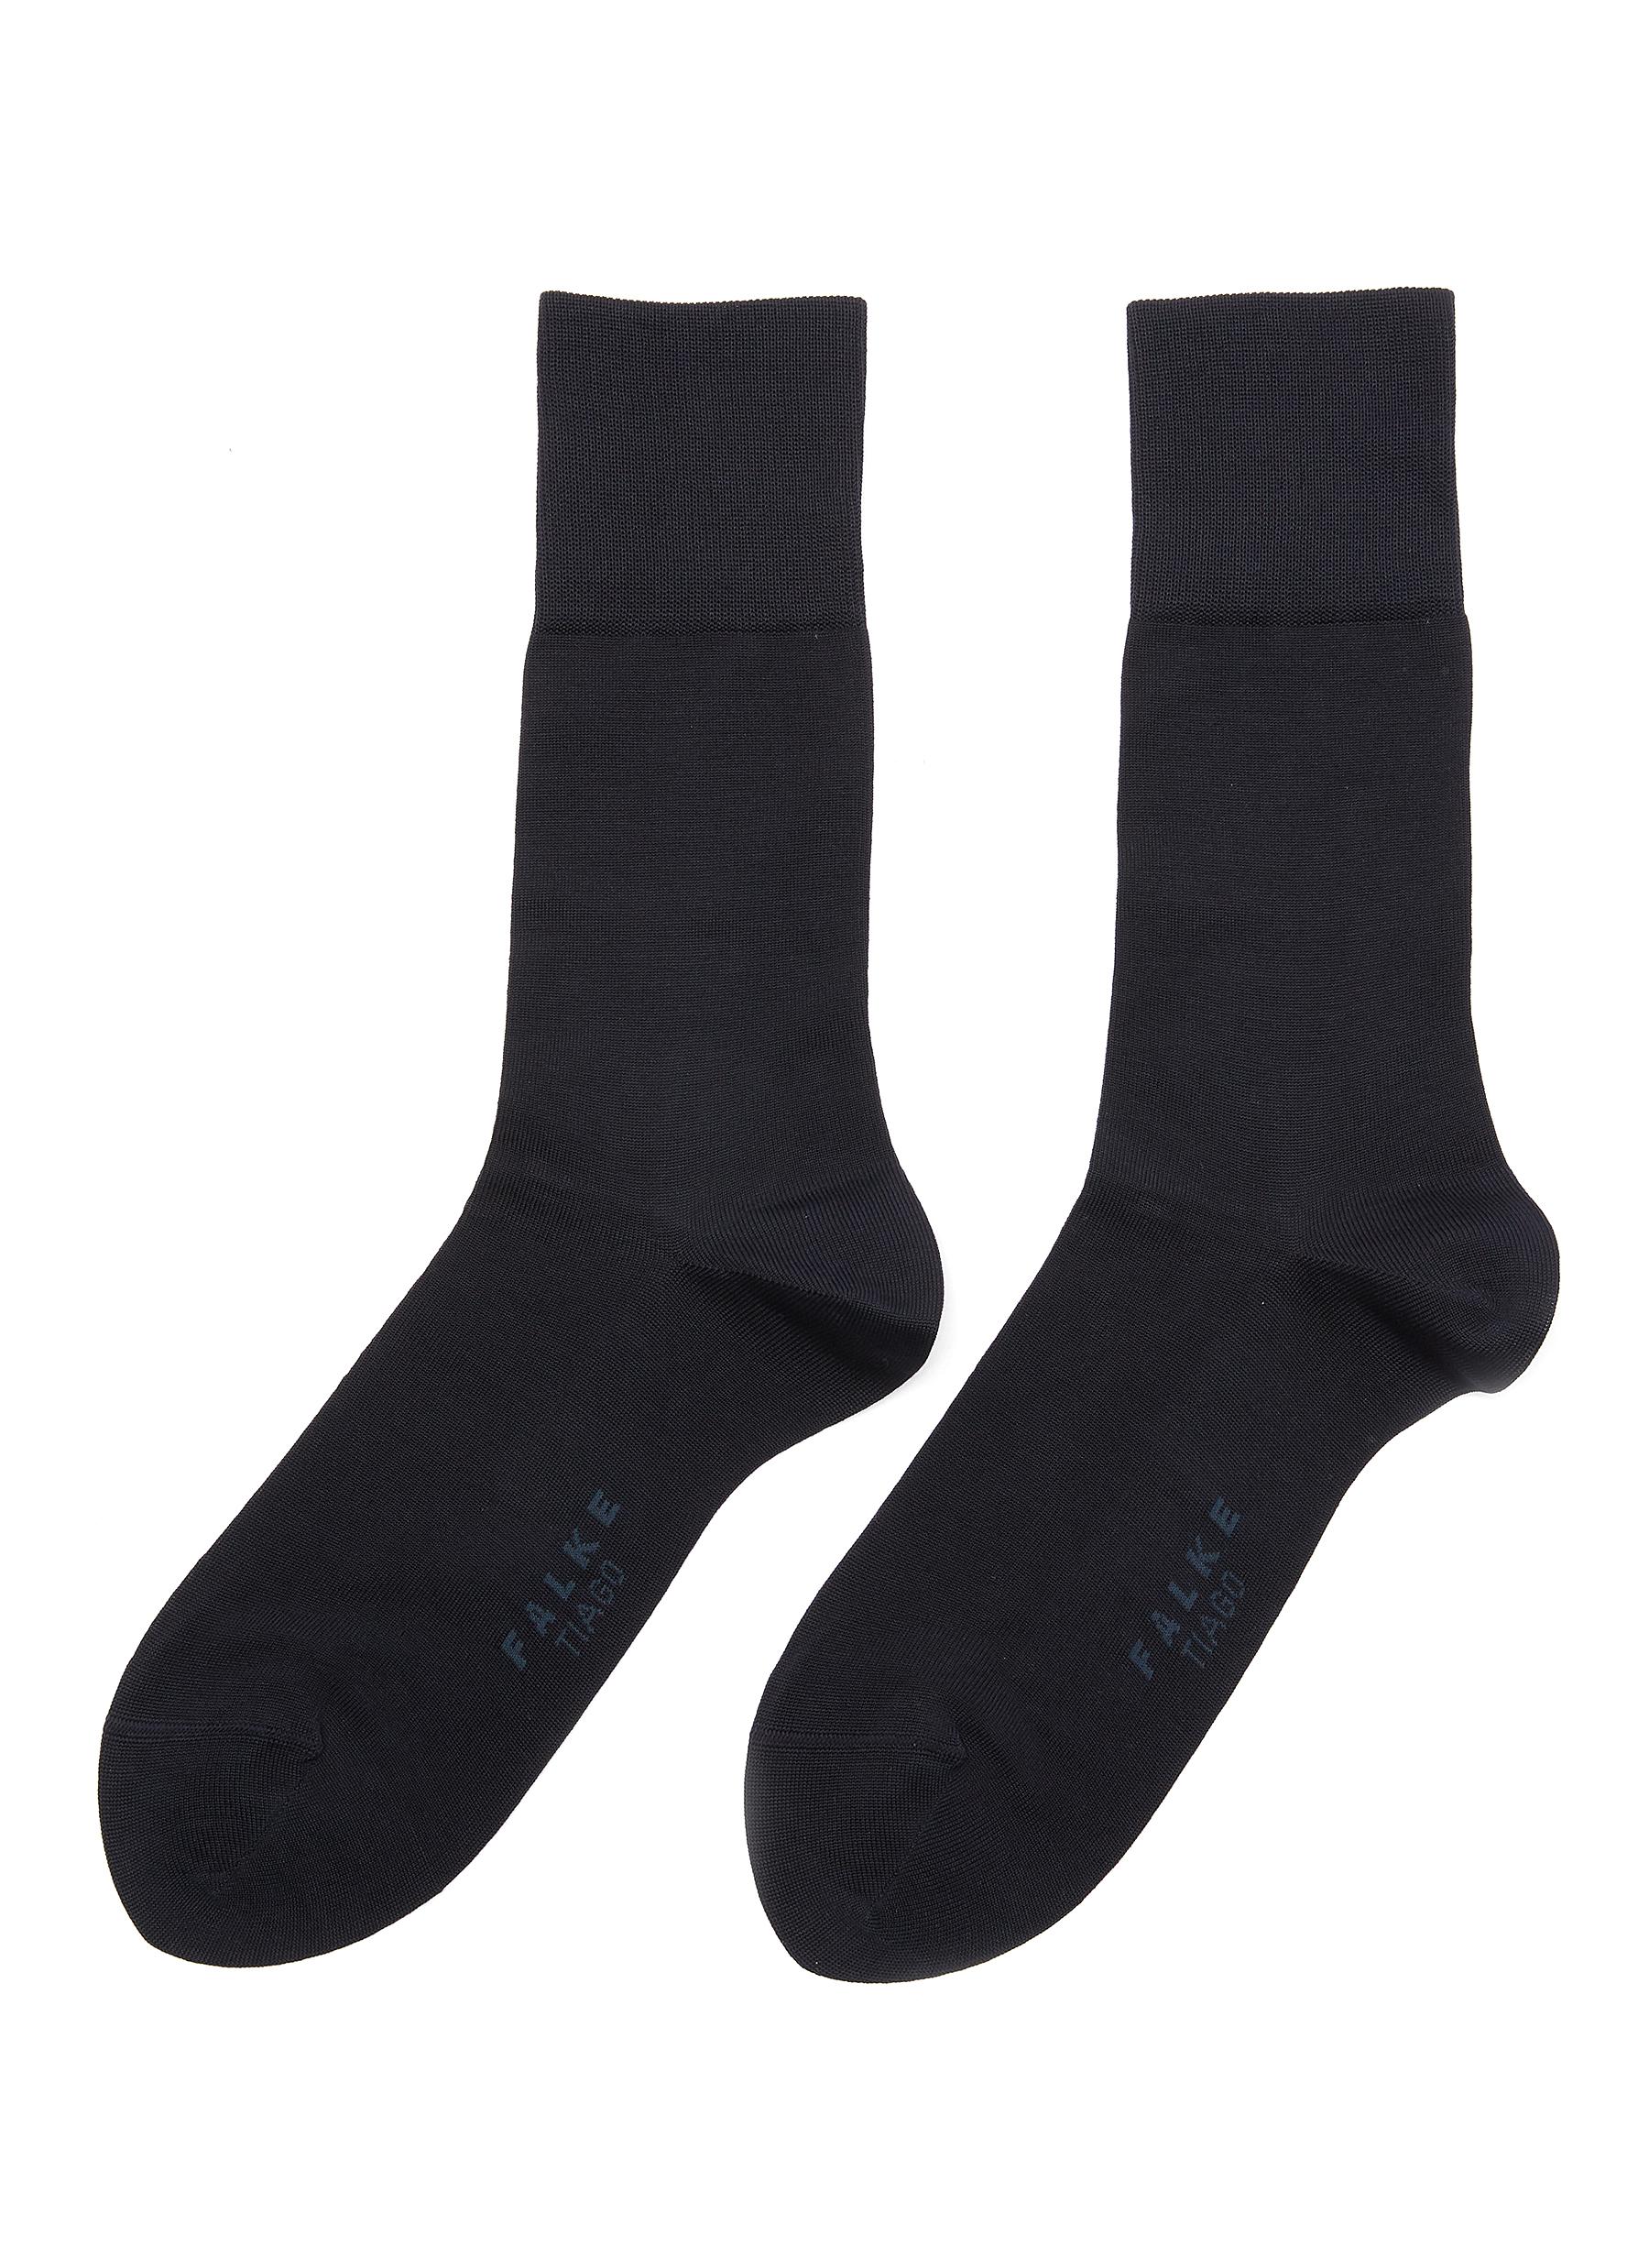 'Tiago' socks